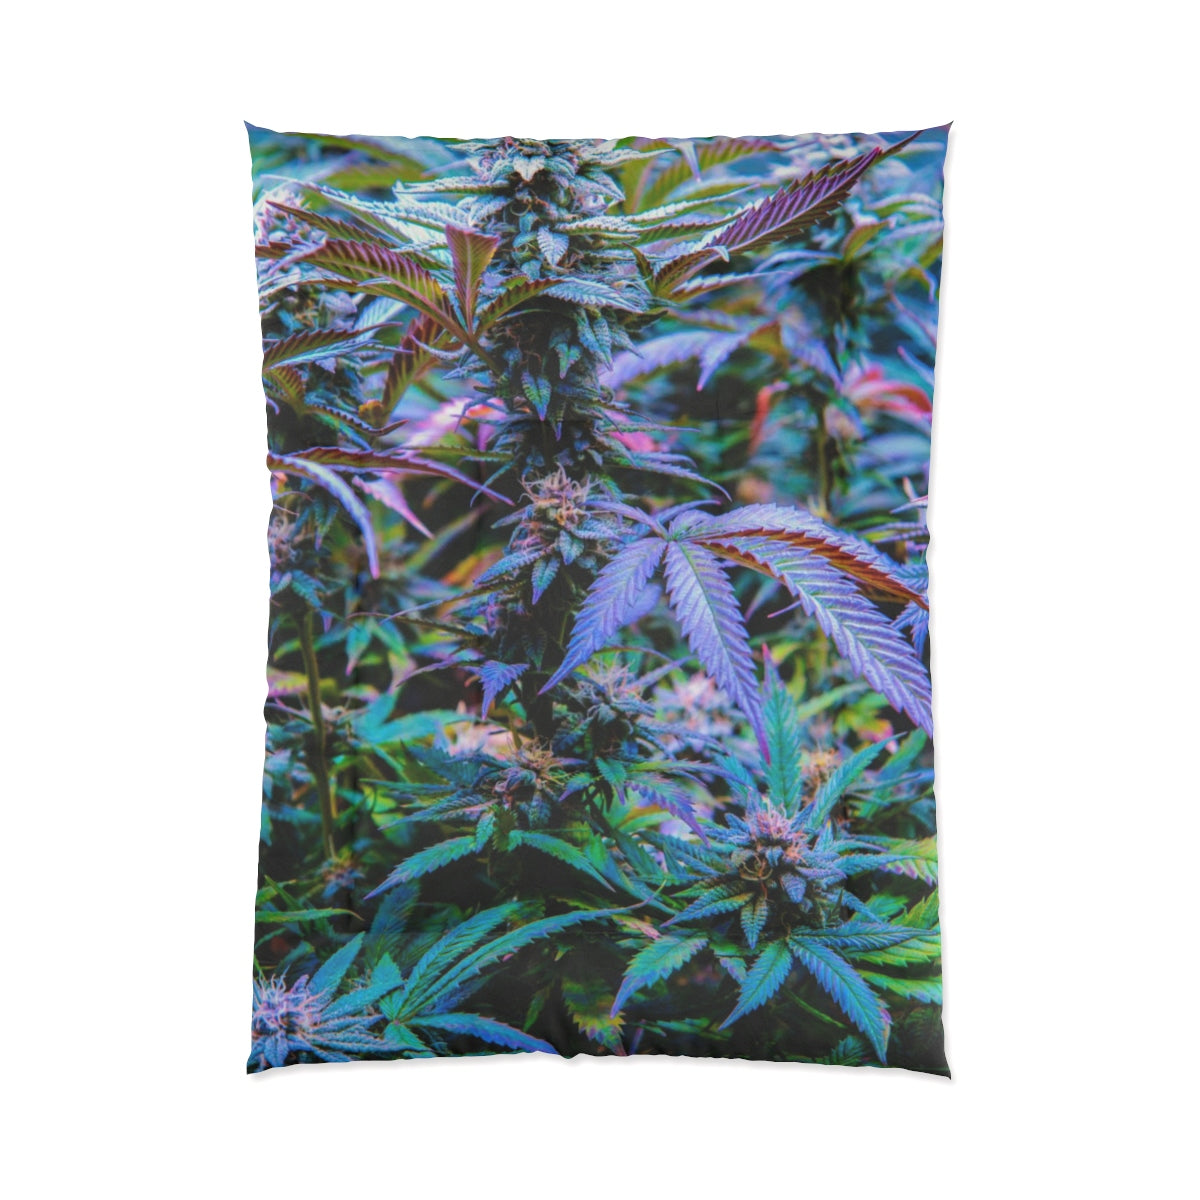 The Rainbow Cannabis Comforter